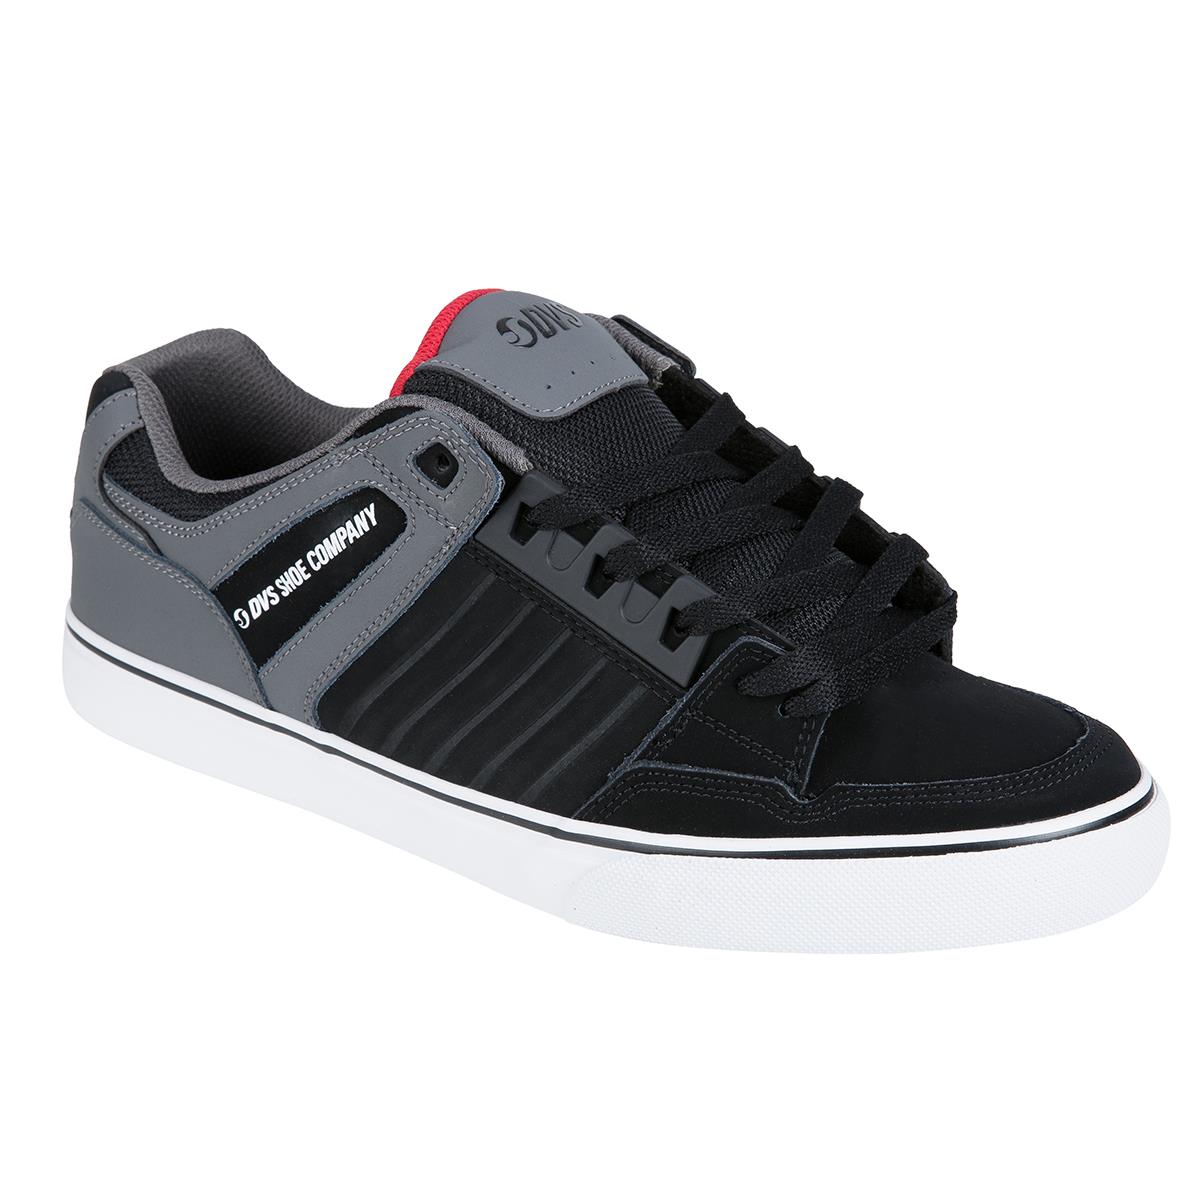 DVS Shoes Celsius CT Black/Charcoal/Red 